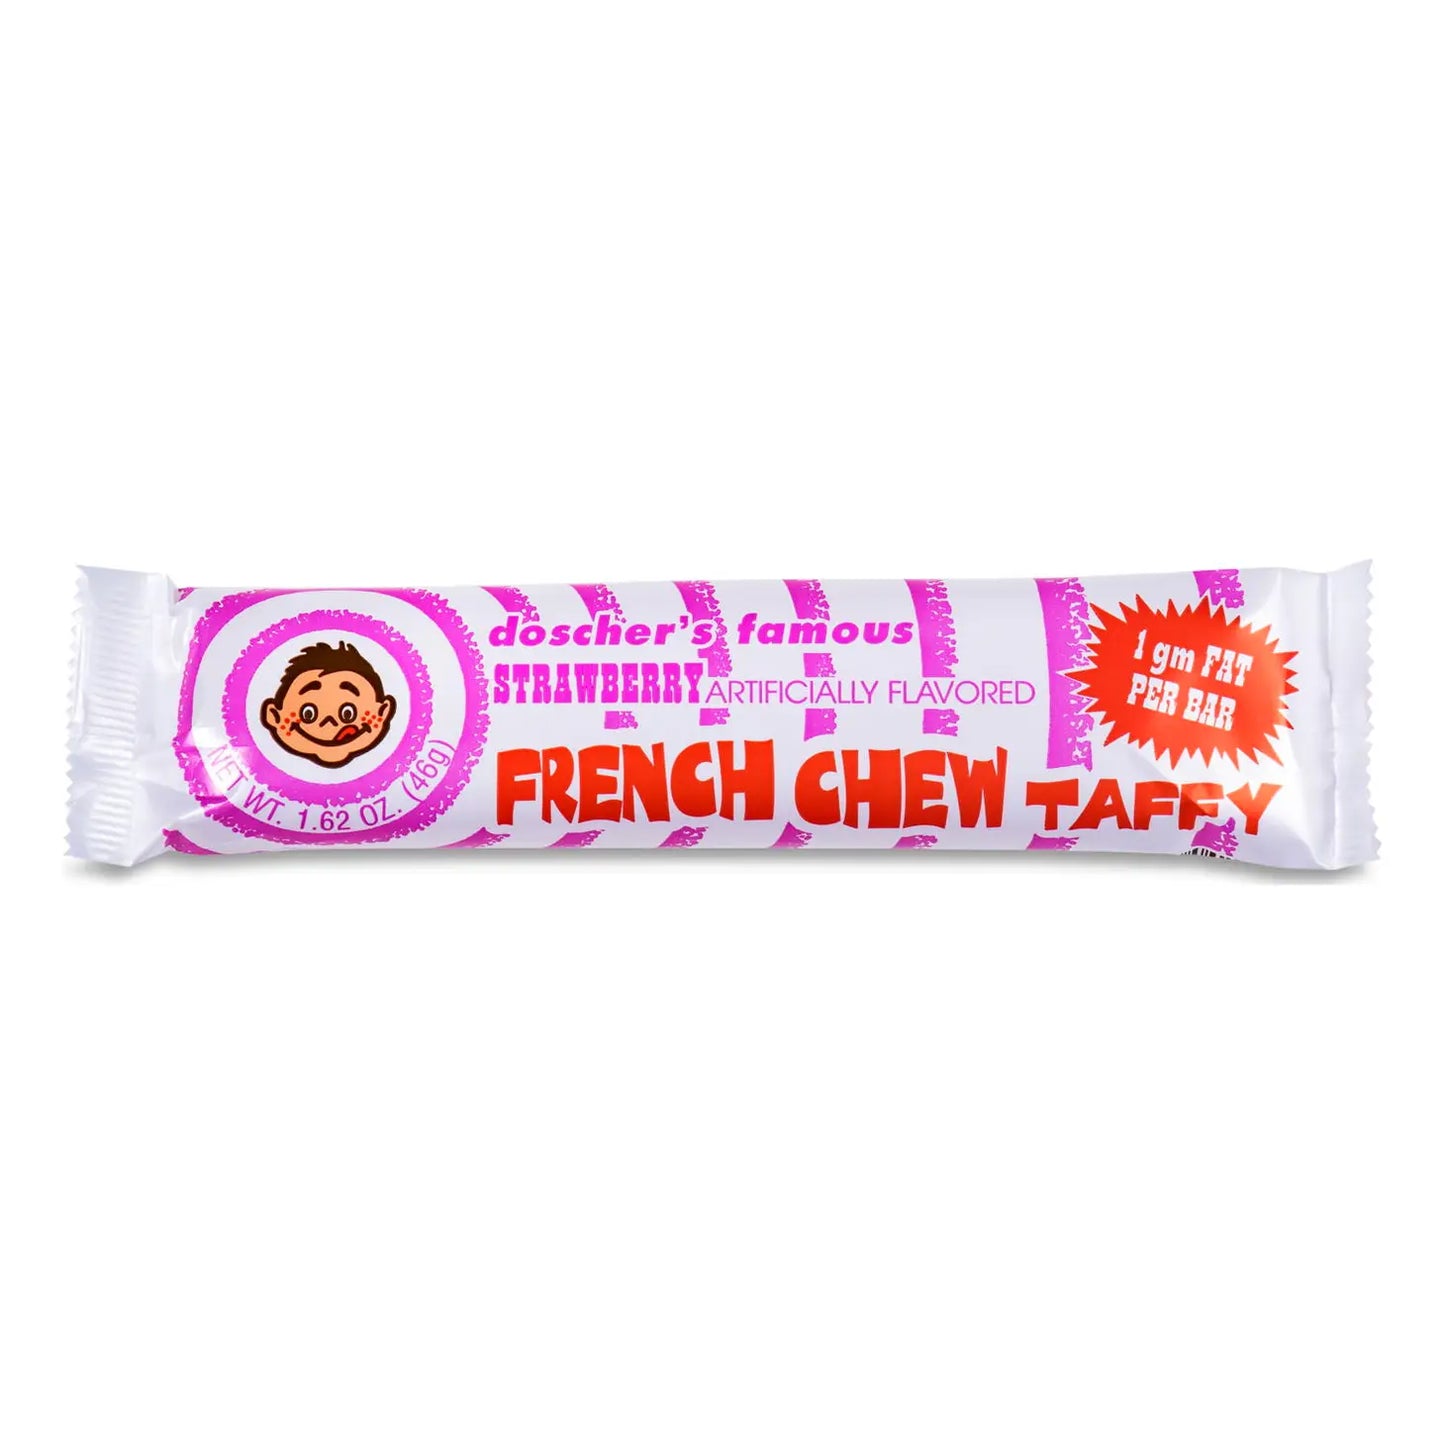 Strawberry French Chew Taffy